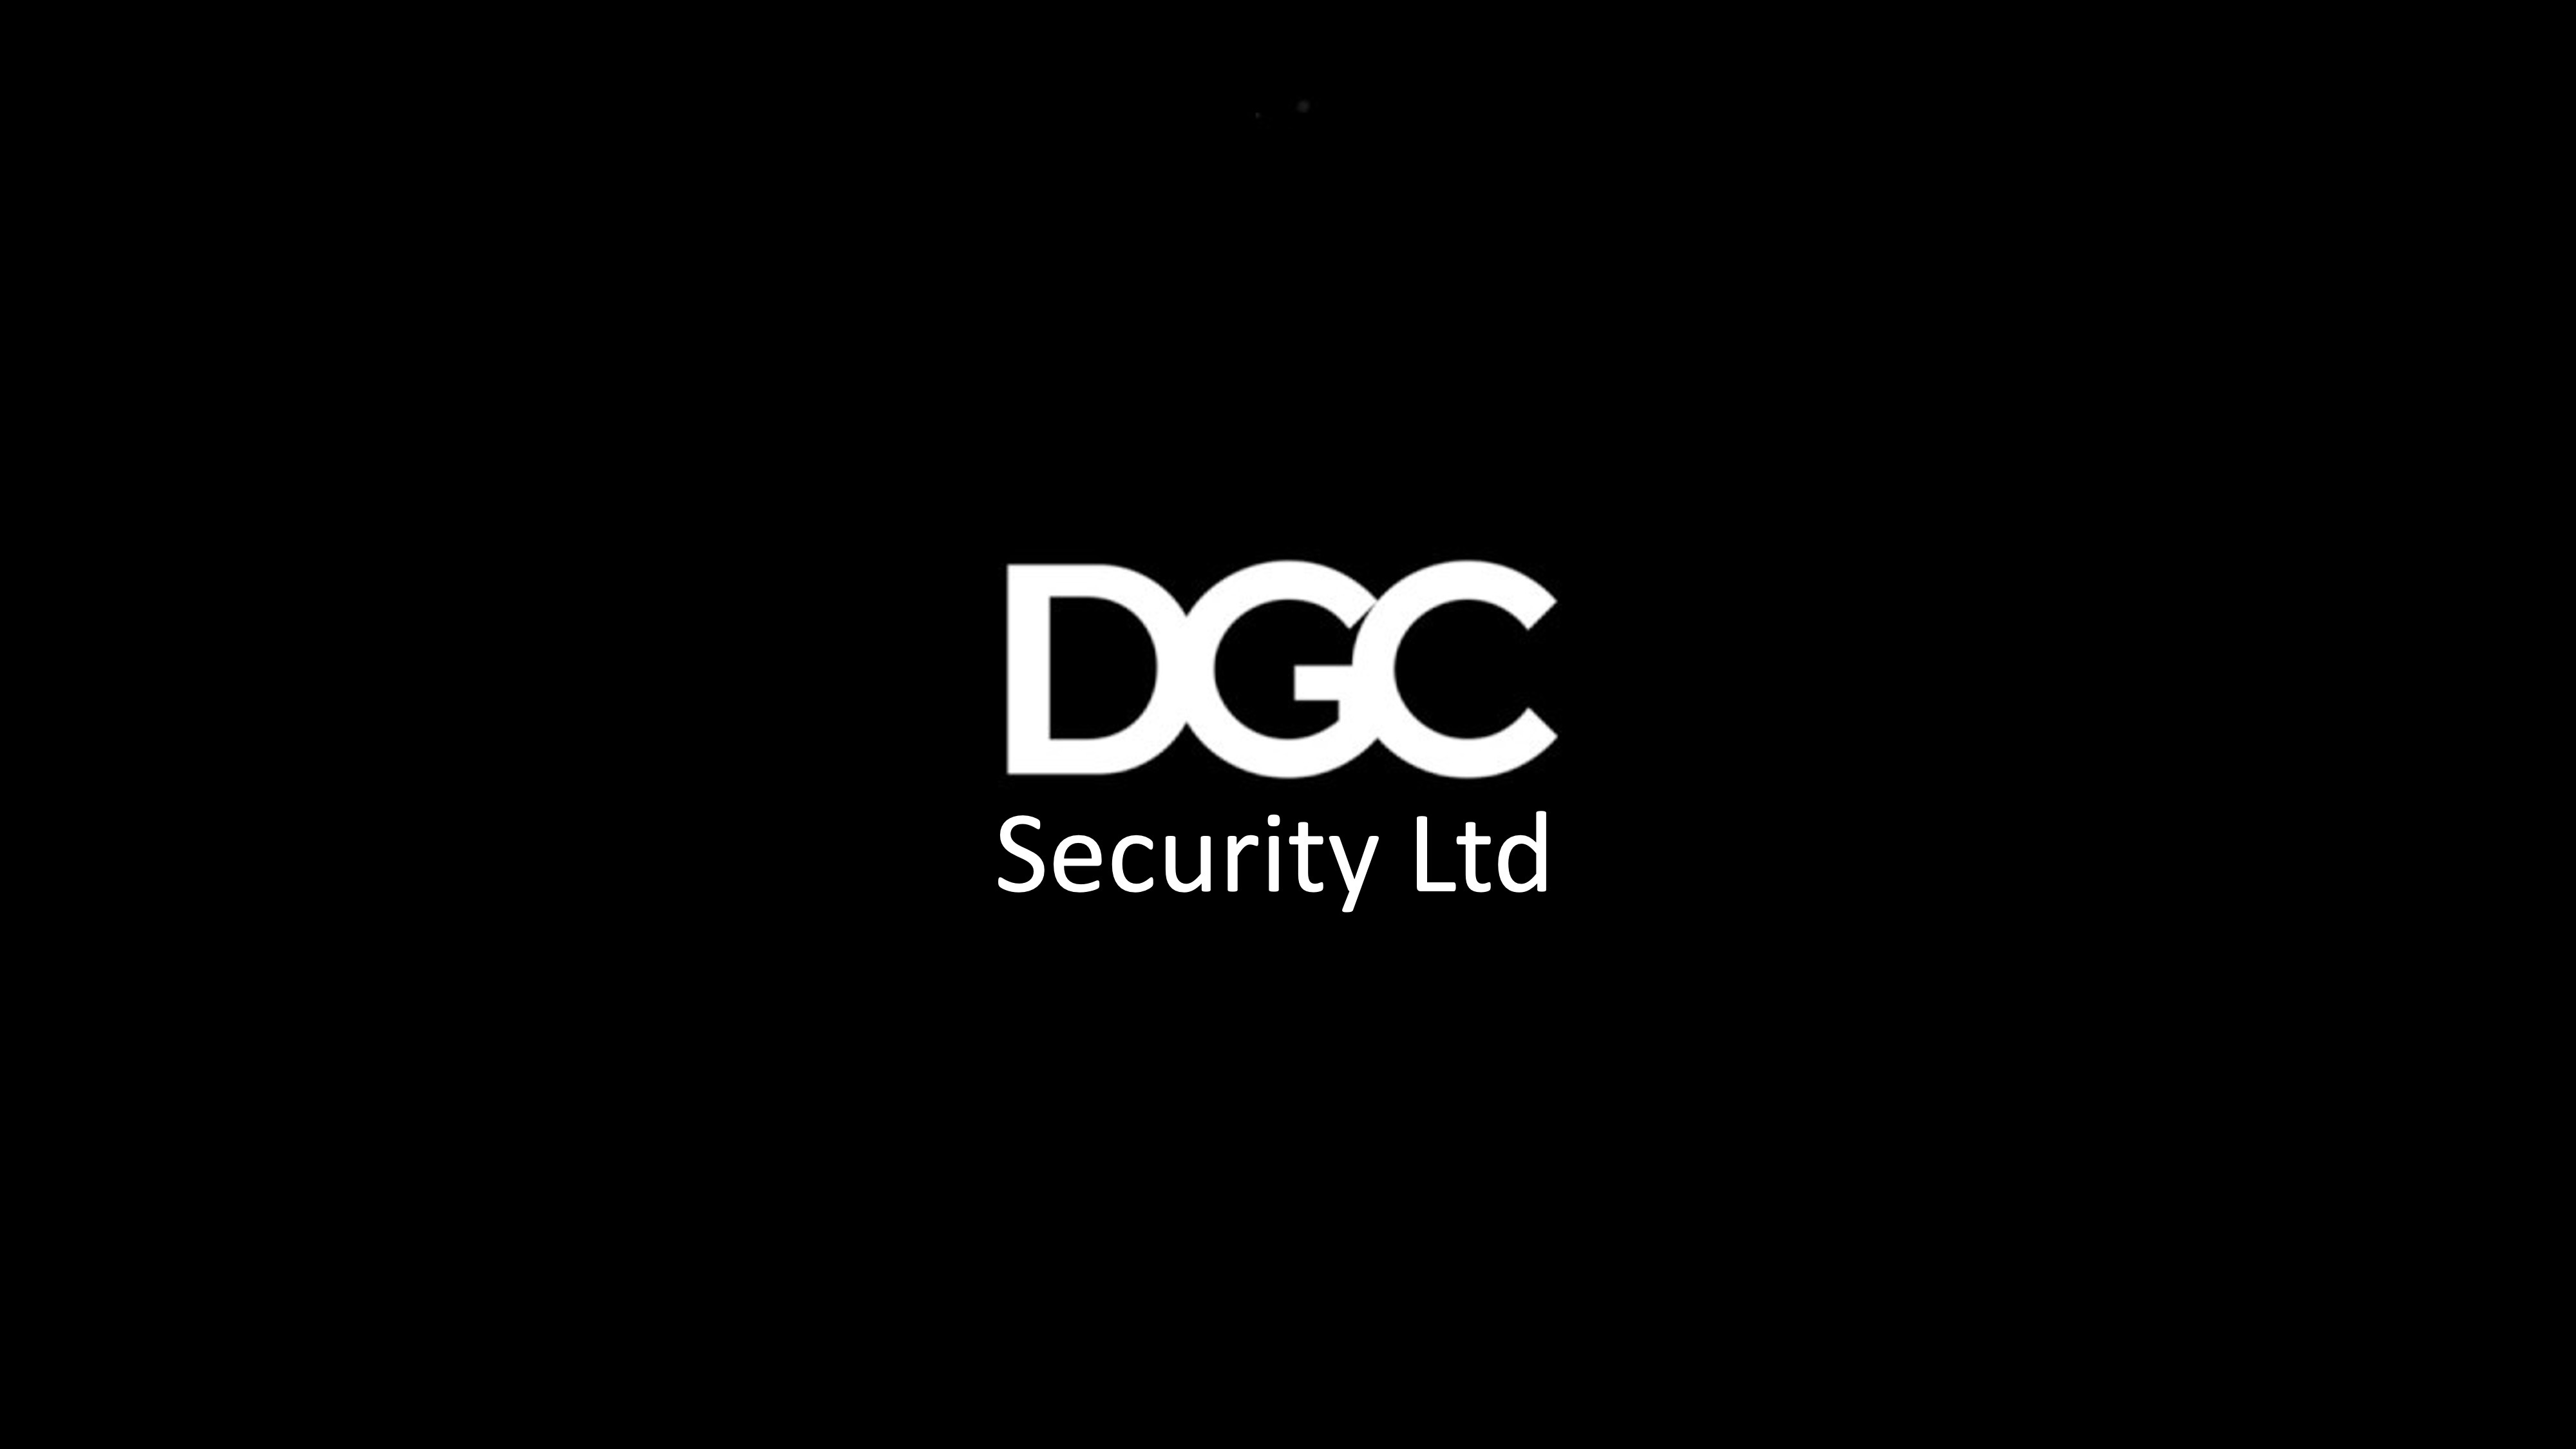 Company logo image - DGC Security Ltd